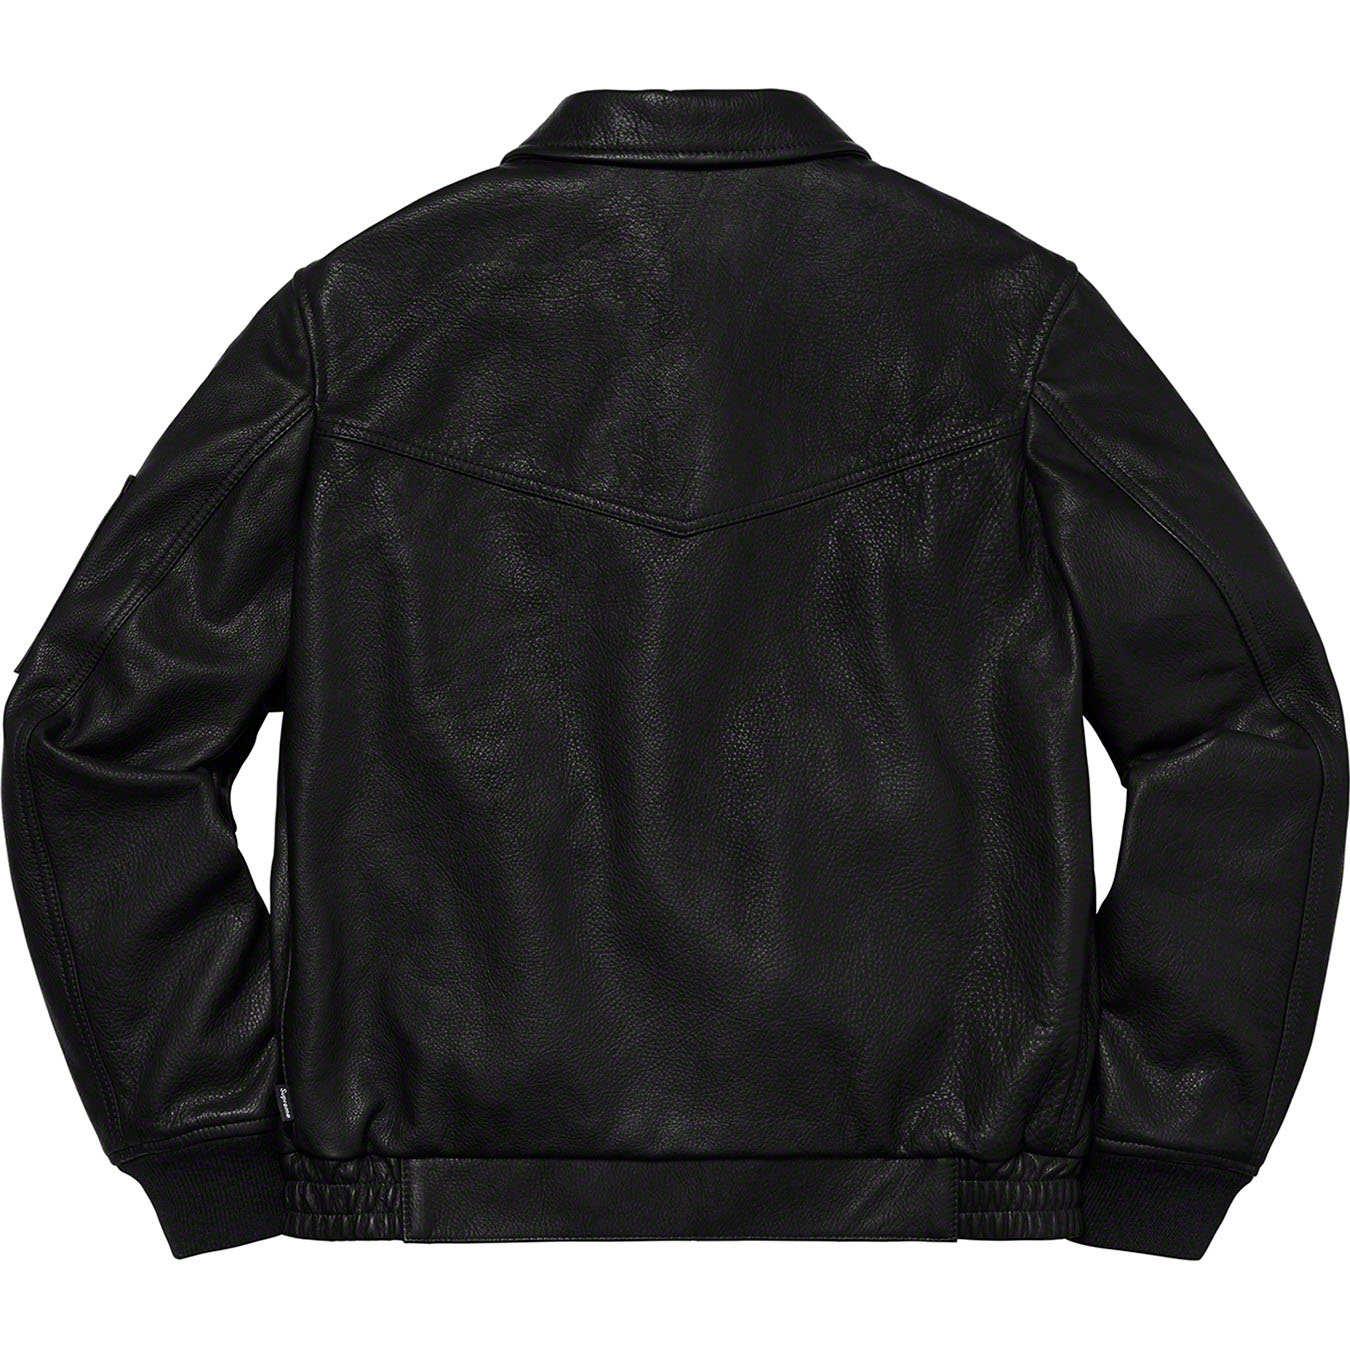 Supreme®/Schott® Leather Tanker Jacket